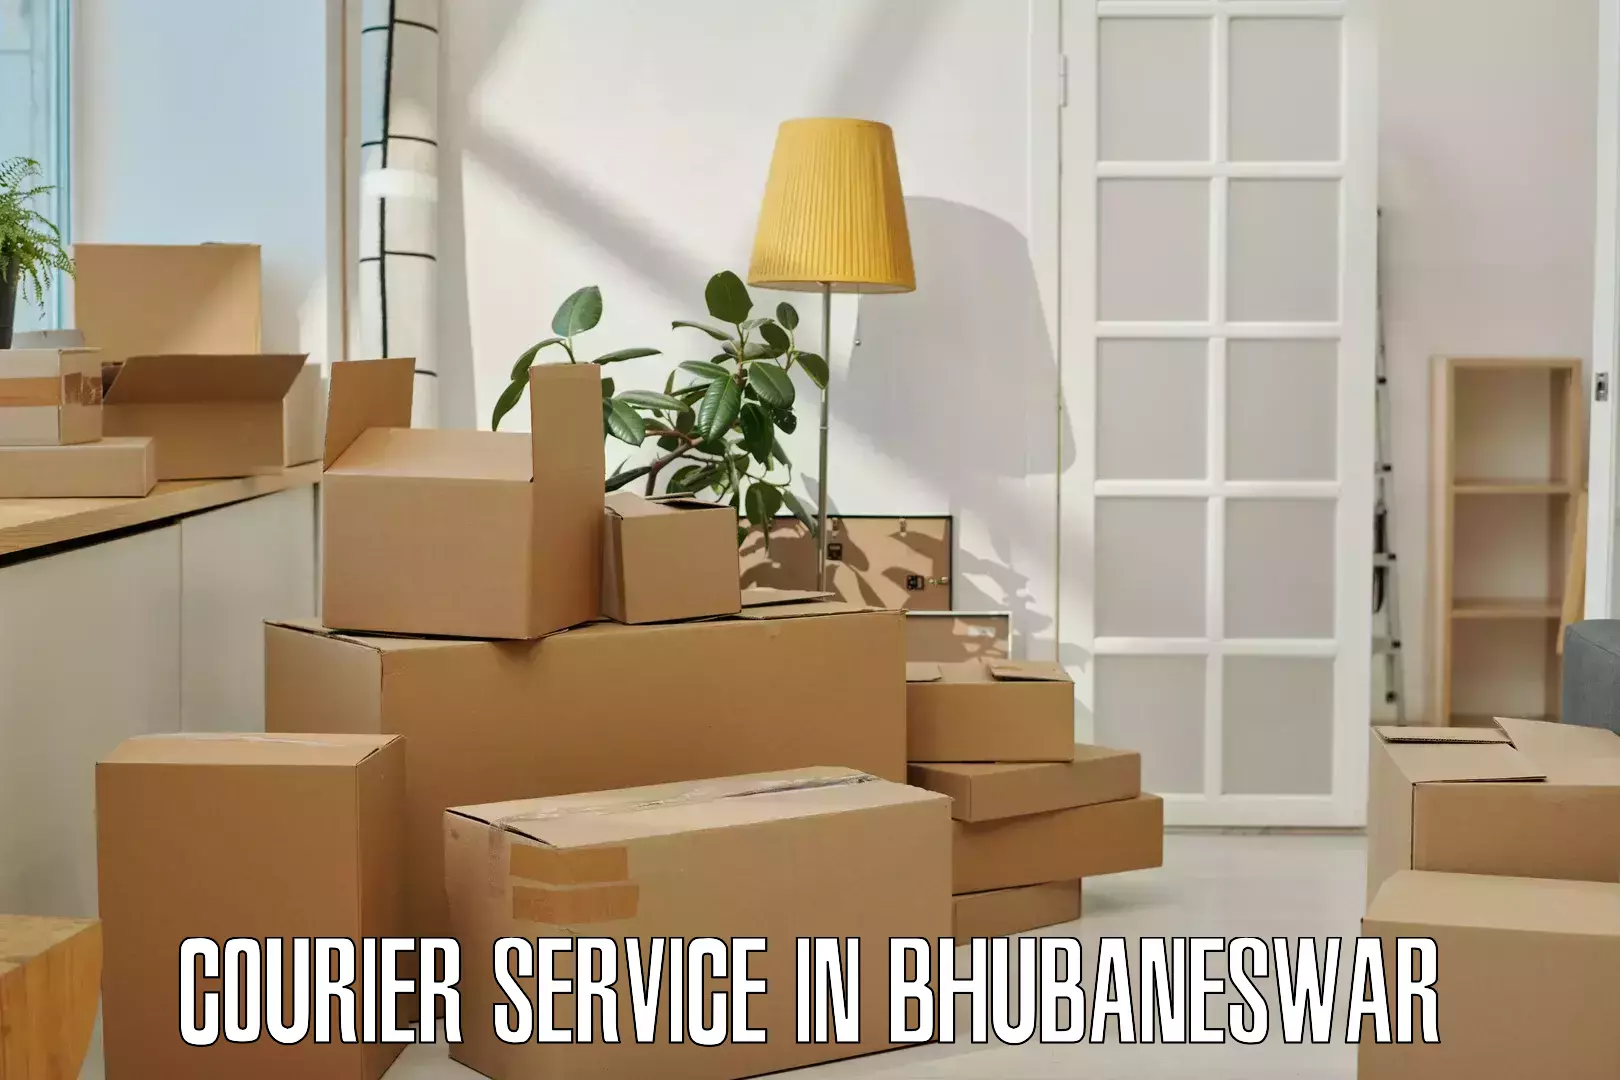 Affordable parcel rates in Bhubaneswar